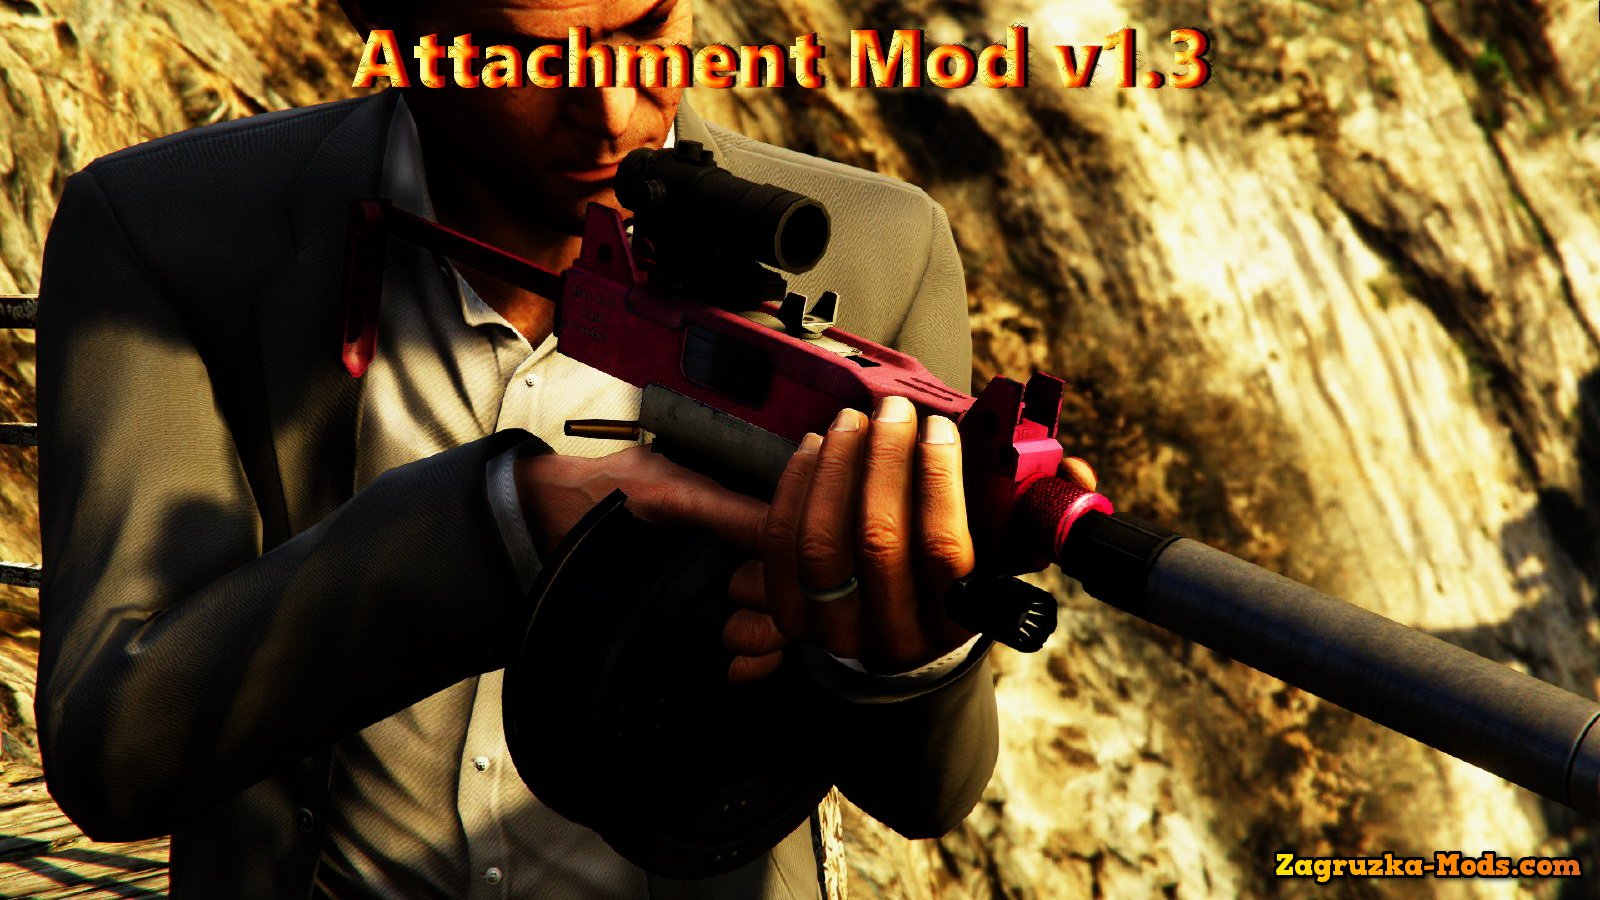 Attachment Mod v1.3 for GTA 5